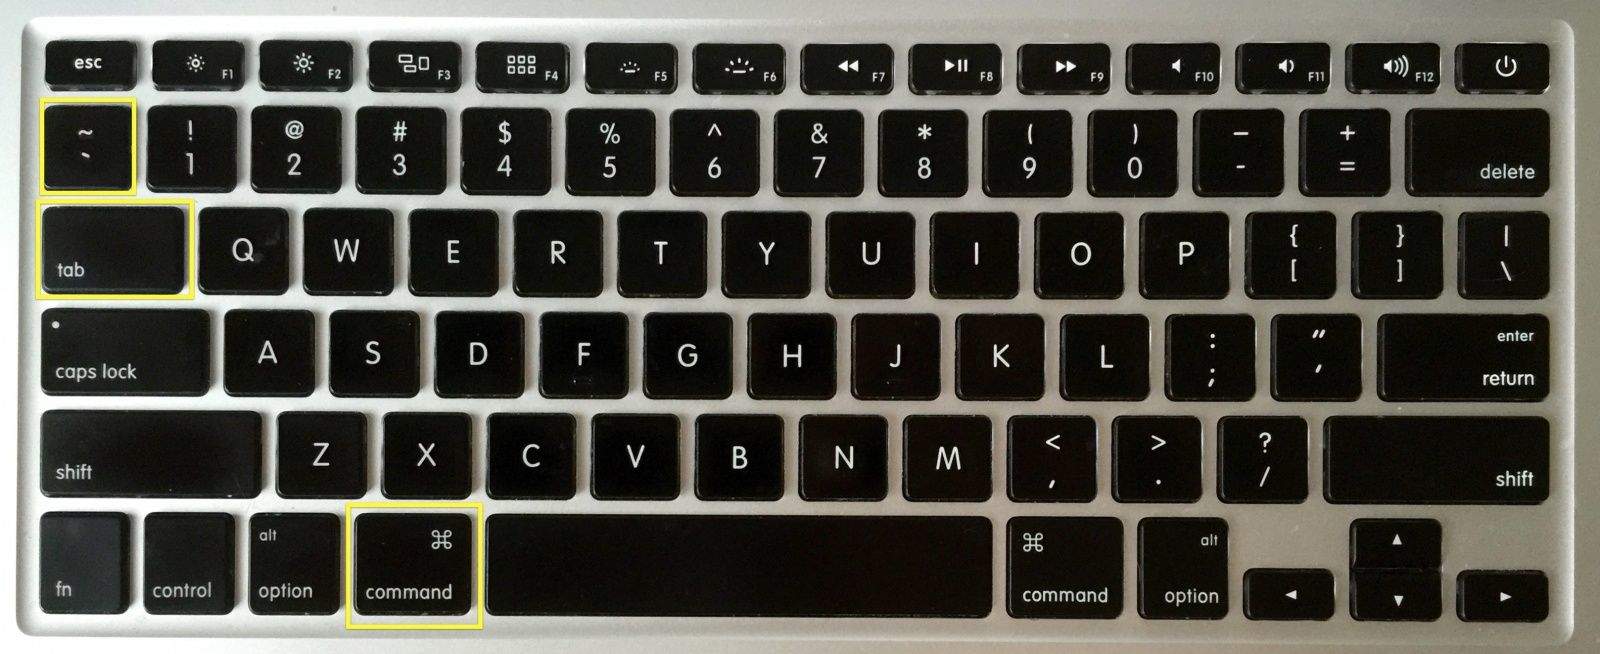 Keyboard shortcuts for macbook